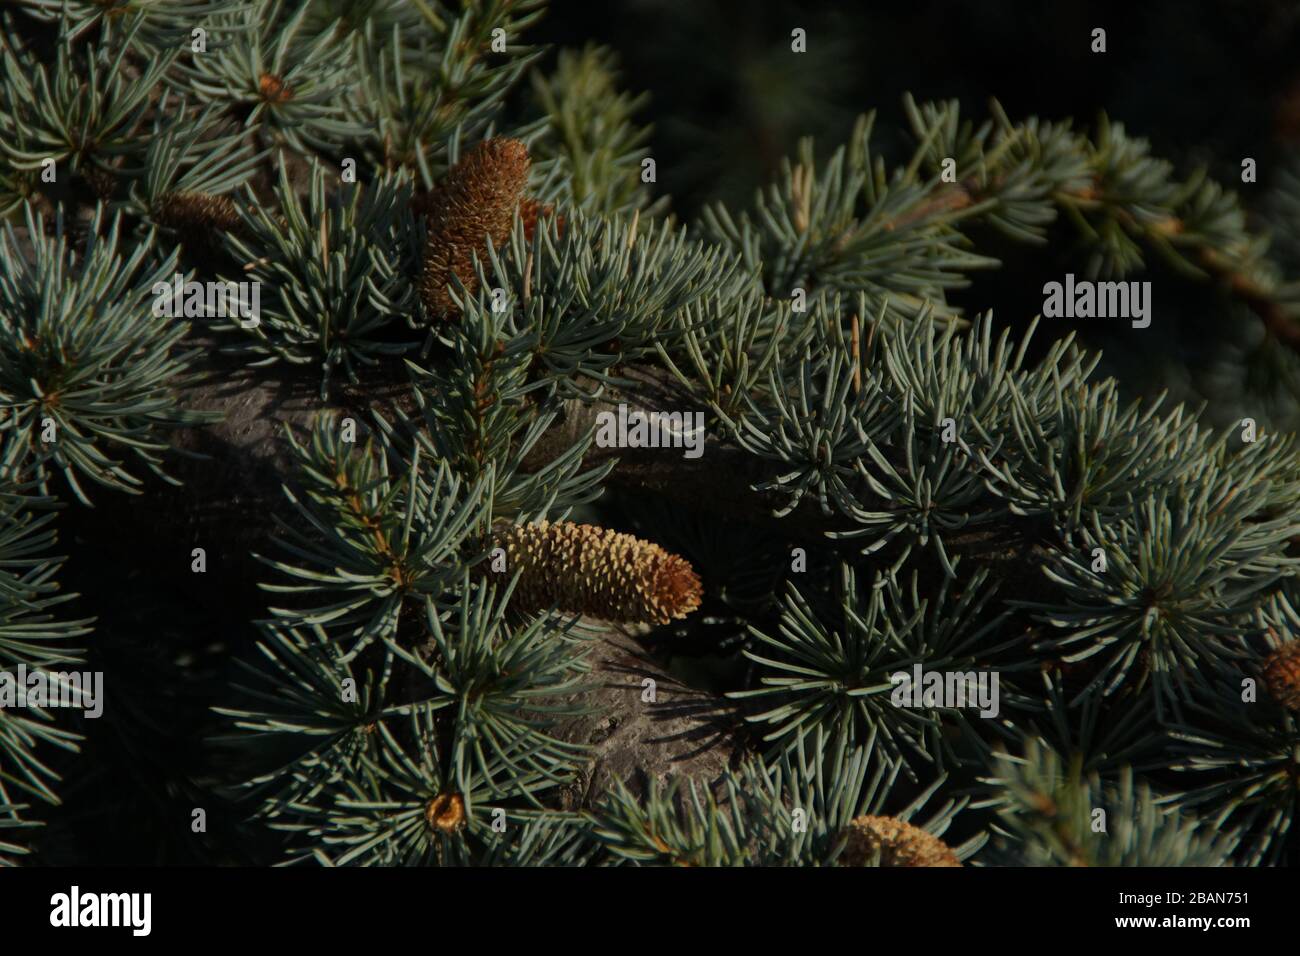 A christmas tree Stock Photo